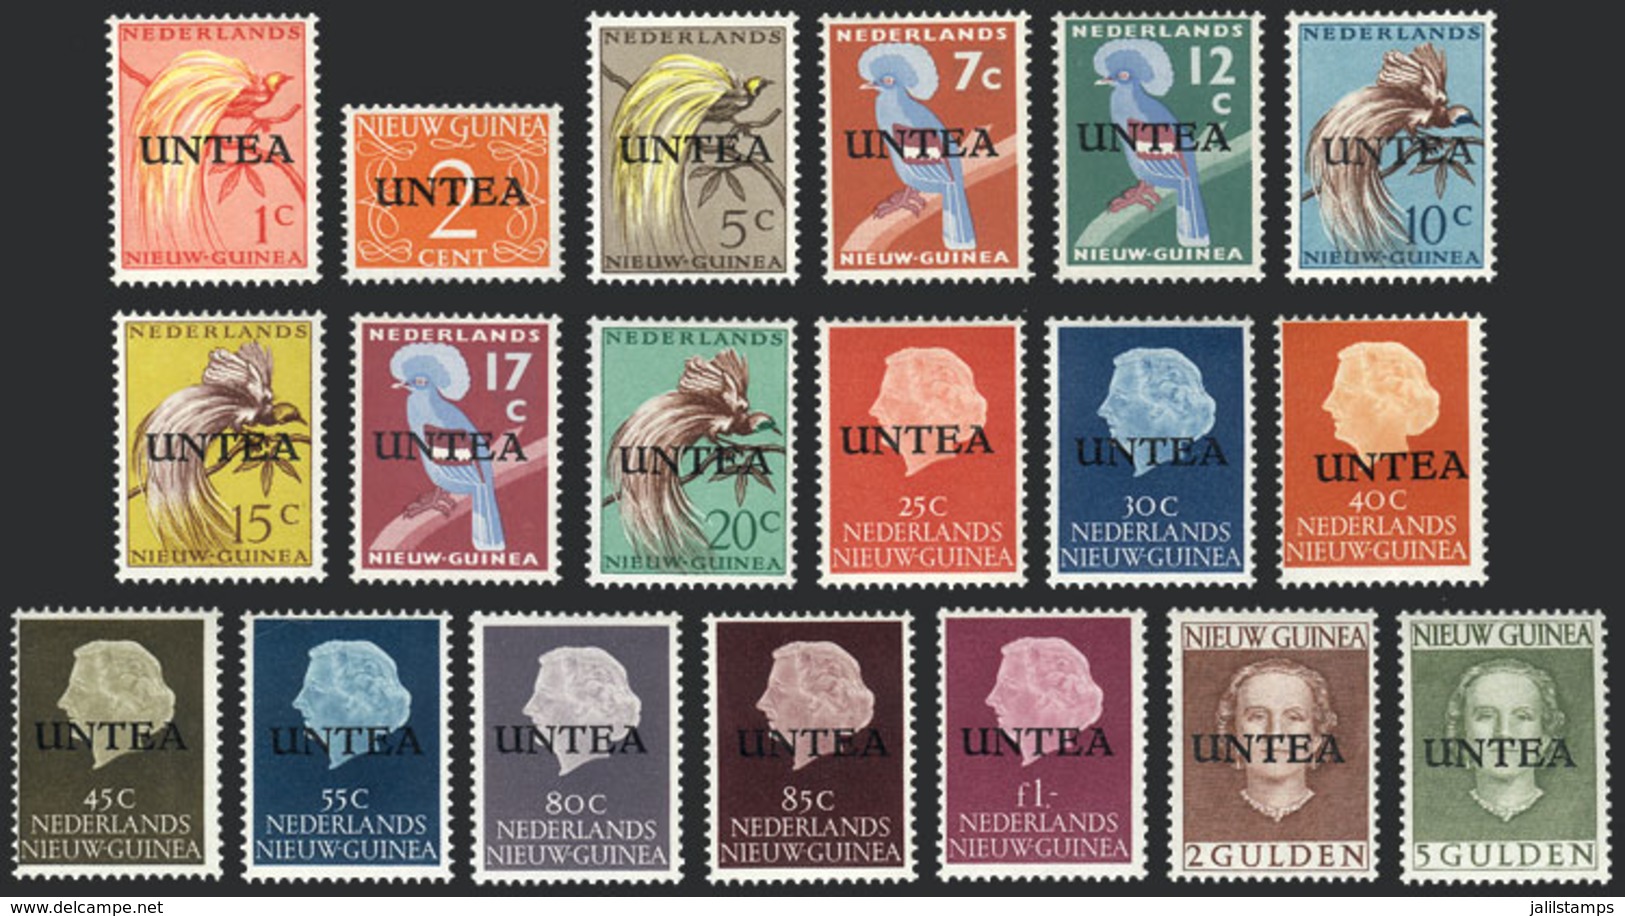 NETHERLANDS NEW GUINEA: Yvert 1/19, 1962 Complete Set Of 19 Overprinted Values, VF Quality! - Netherlands New Guinea